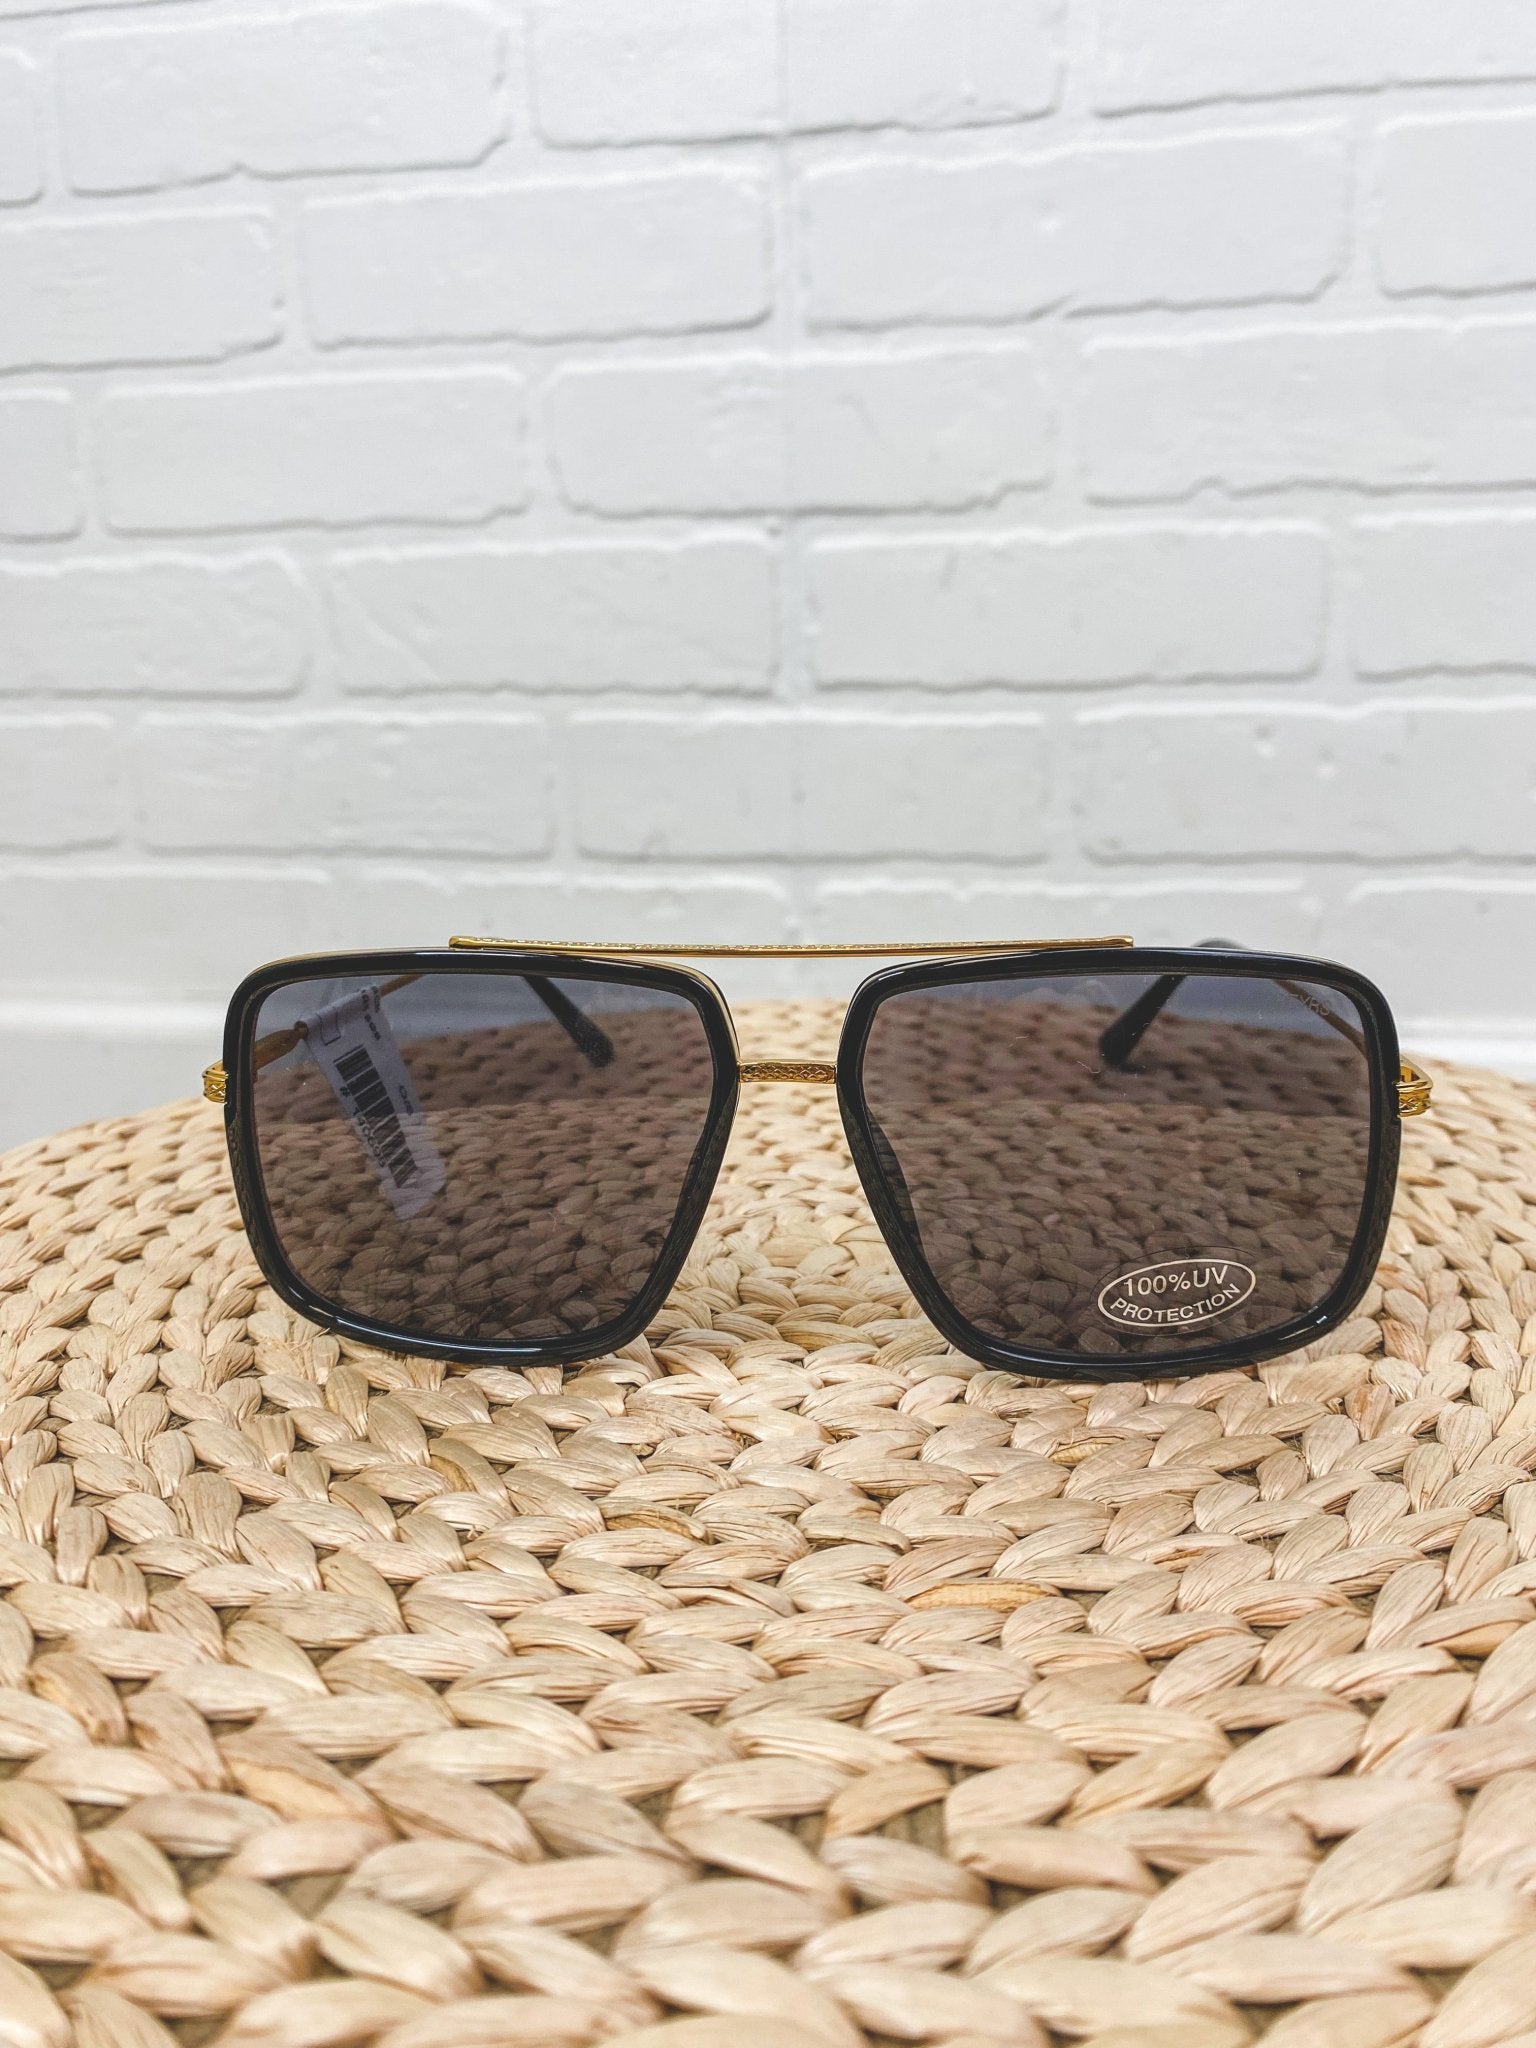 Freyrs Belden sunglasses black - Cute Sunglasses - Fun Wayfarers at Lush Fashion Lounge Boutique in Oklahoma